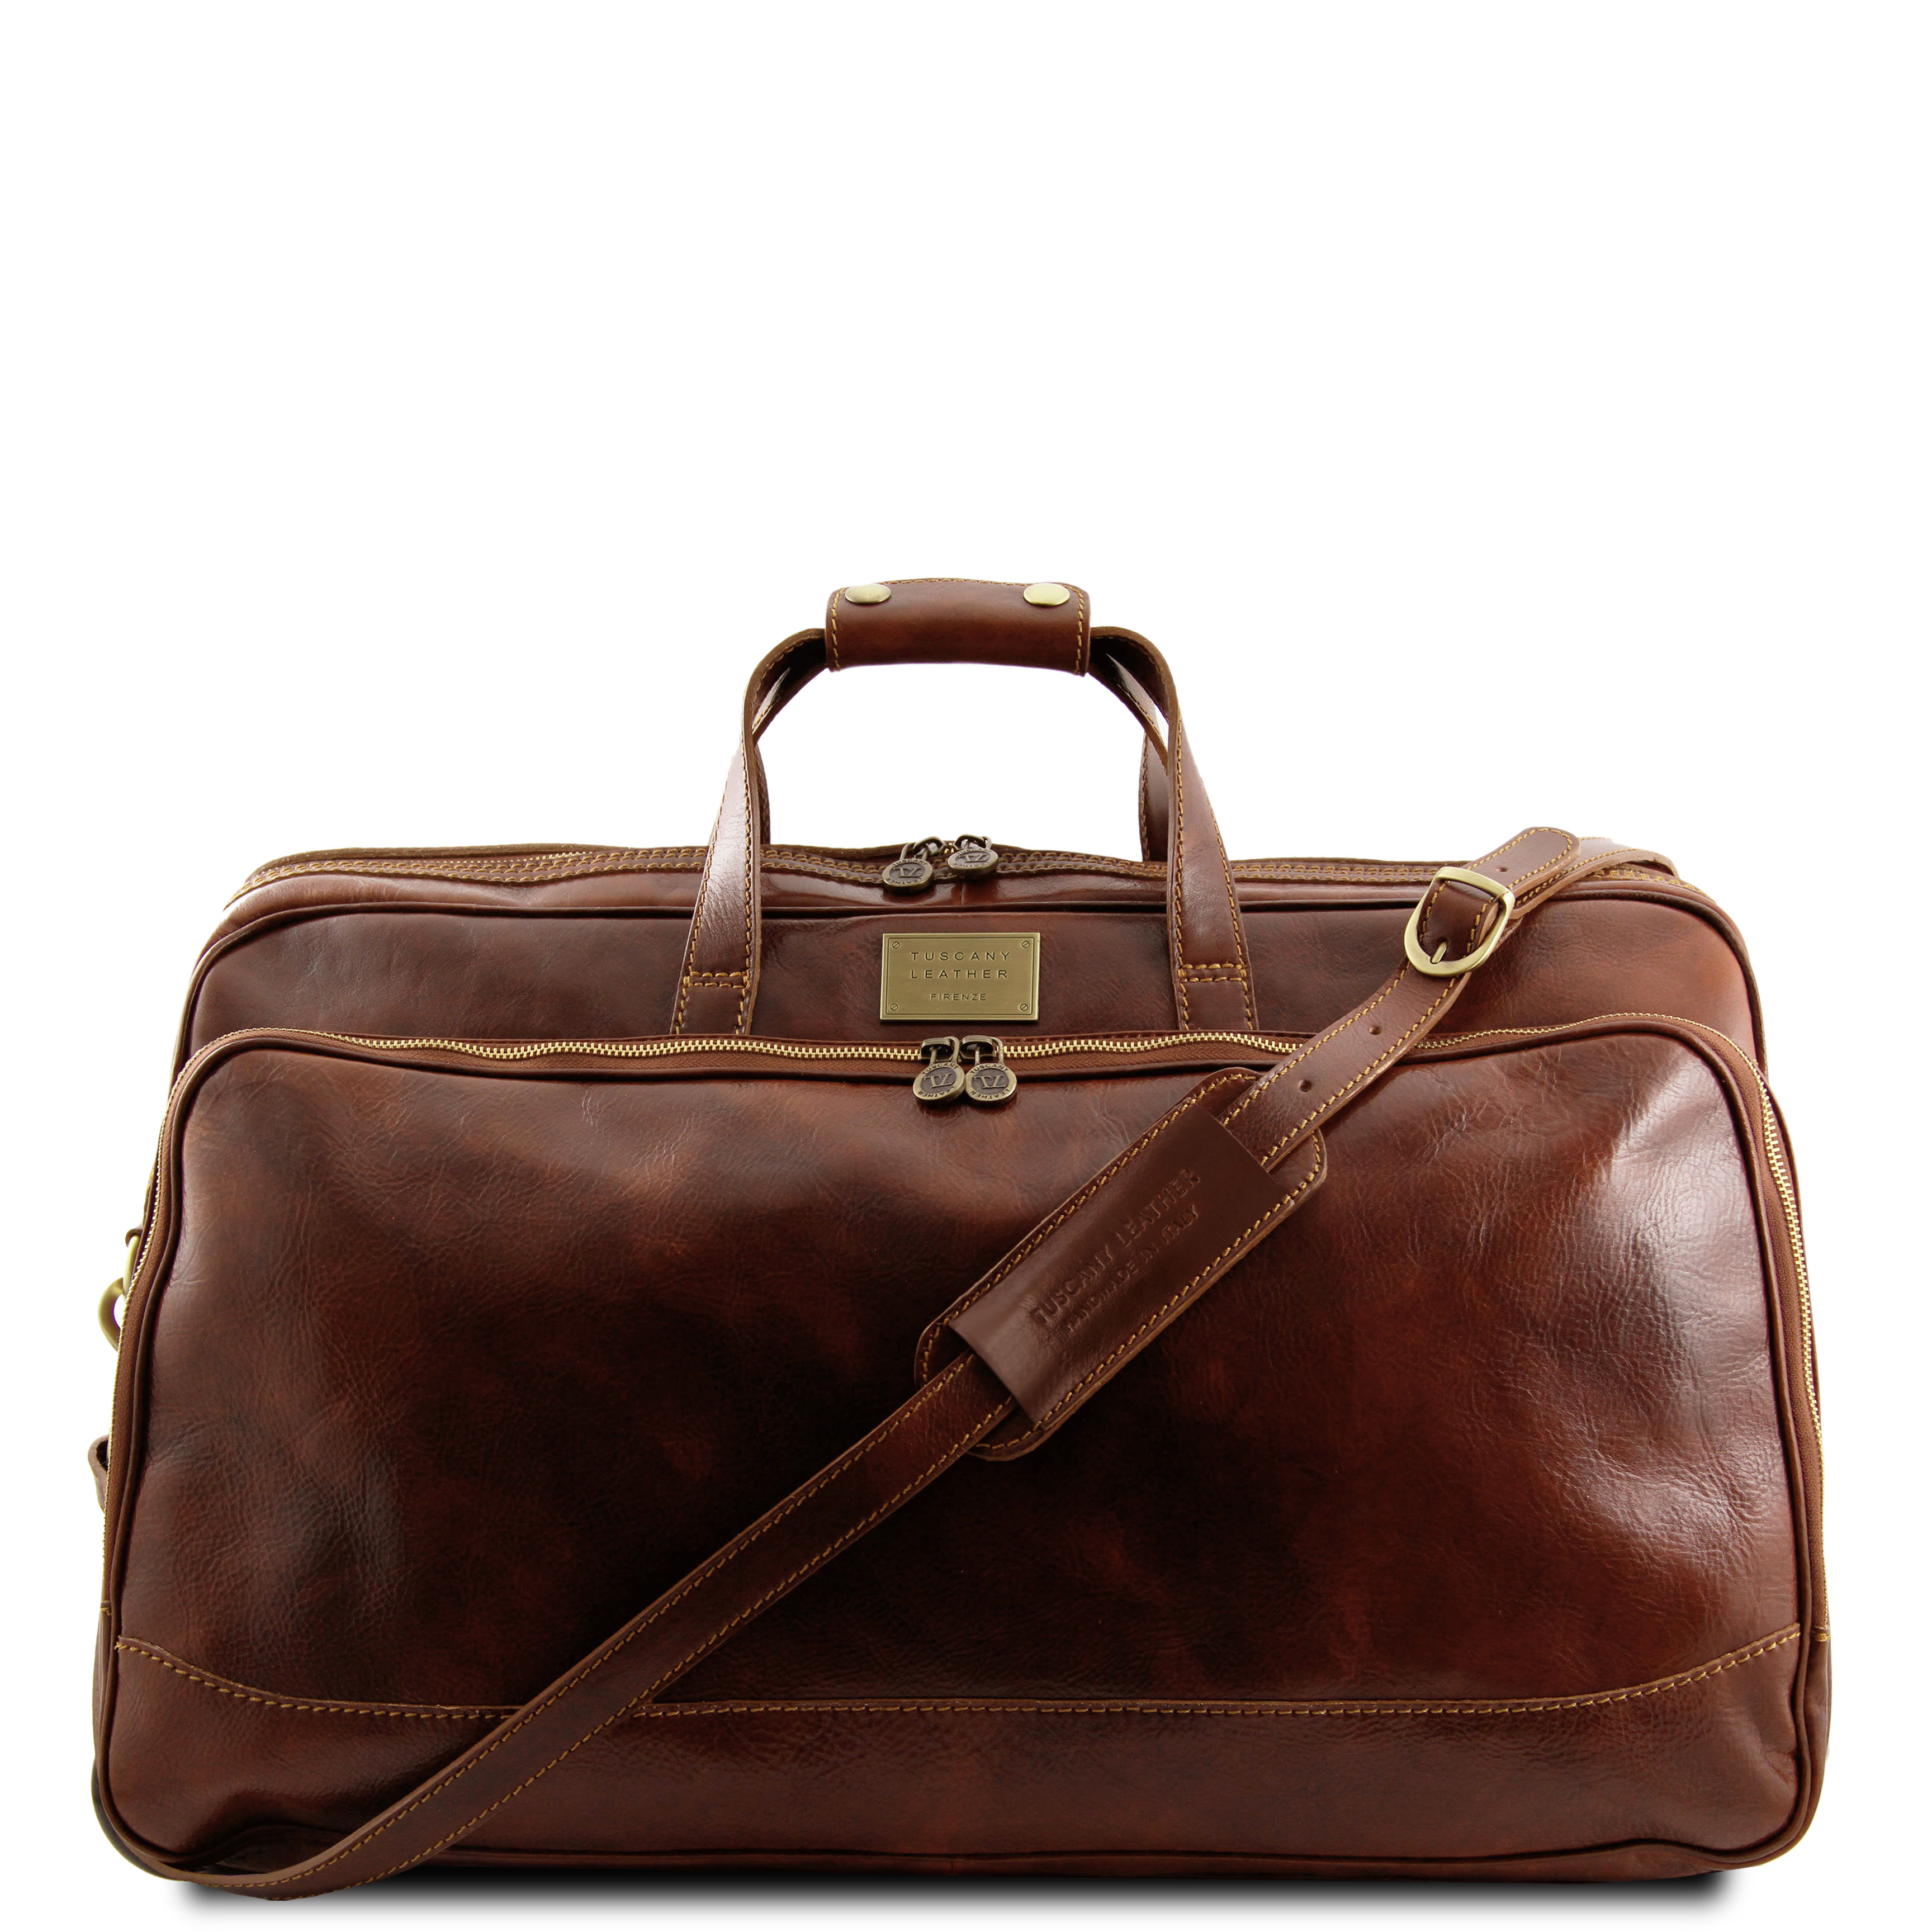 Bora Bora Trolley leather bag - Small size Brown